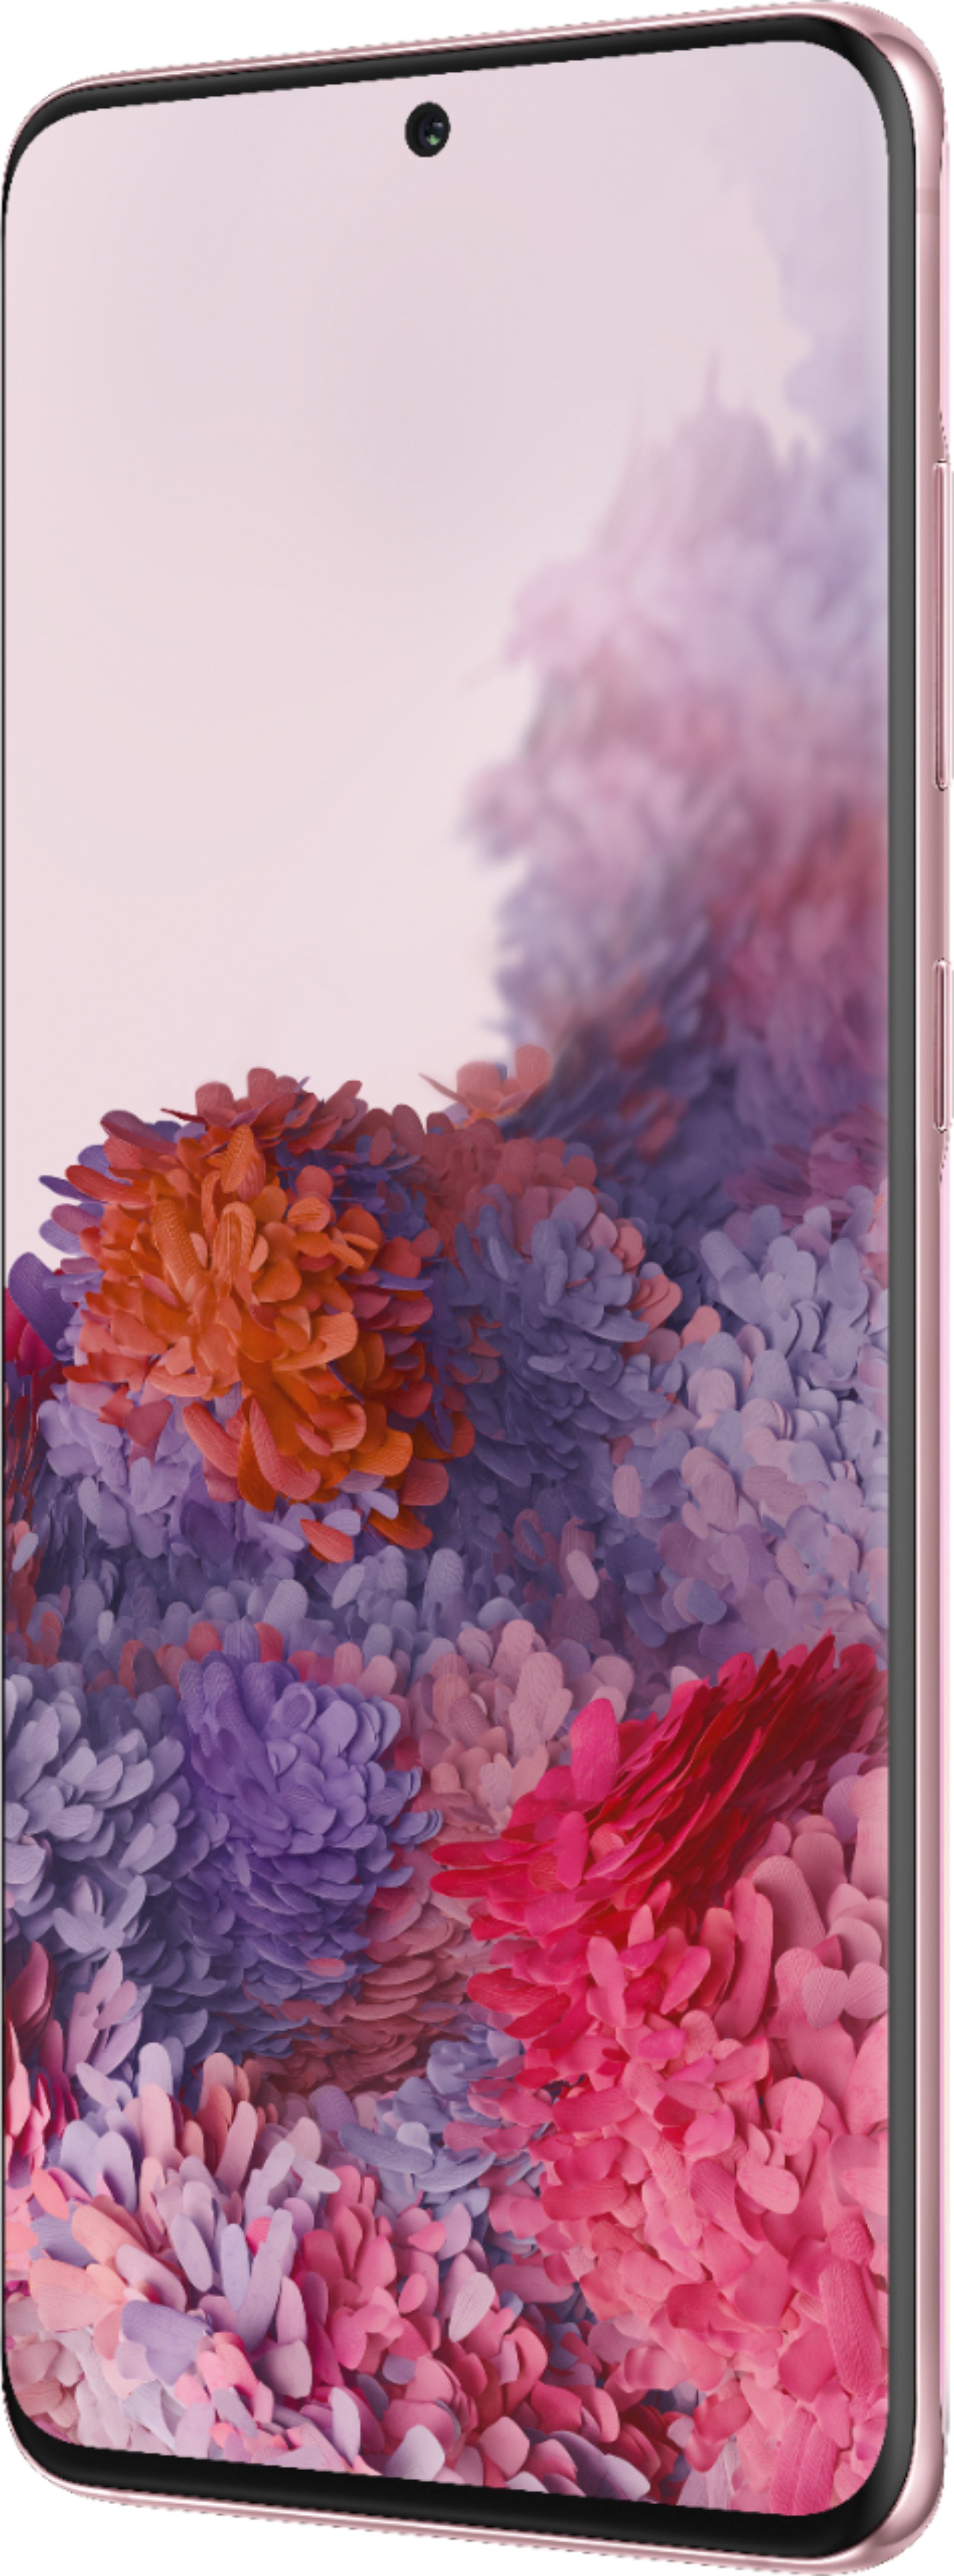 Best Buy: Samsung Galaxy S20 5G Enabled 128GB (Unlocked) SM